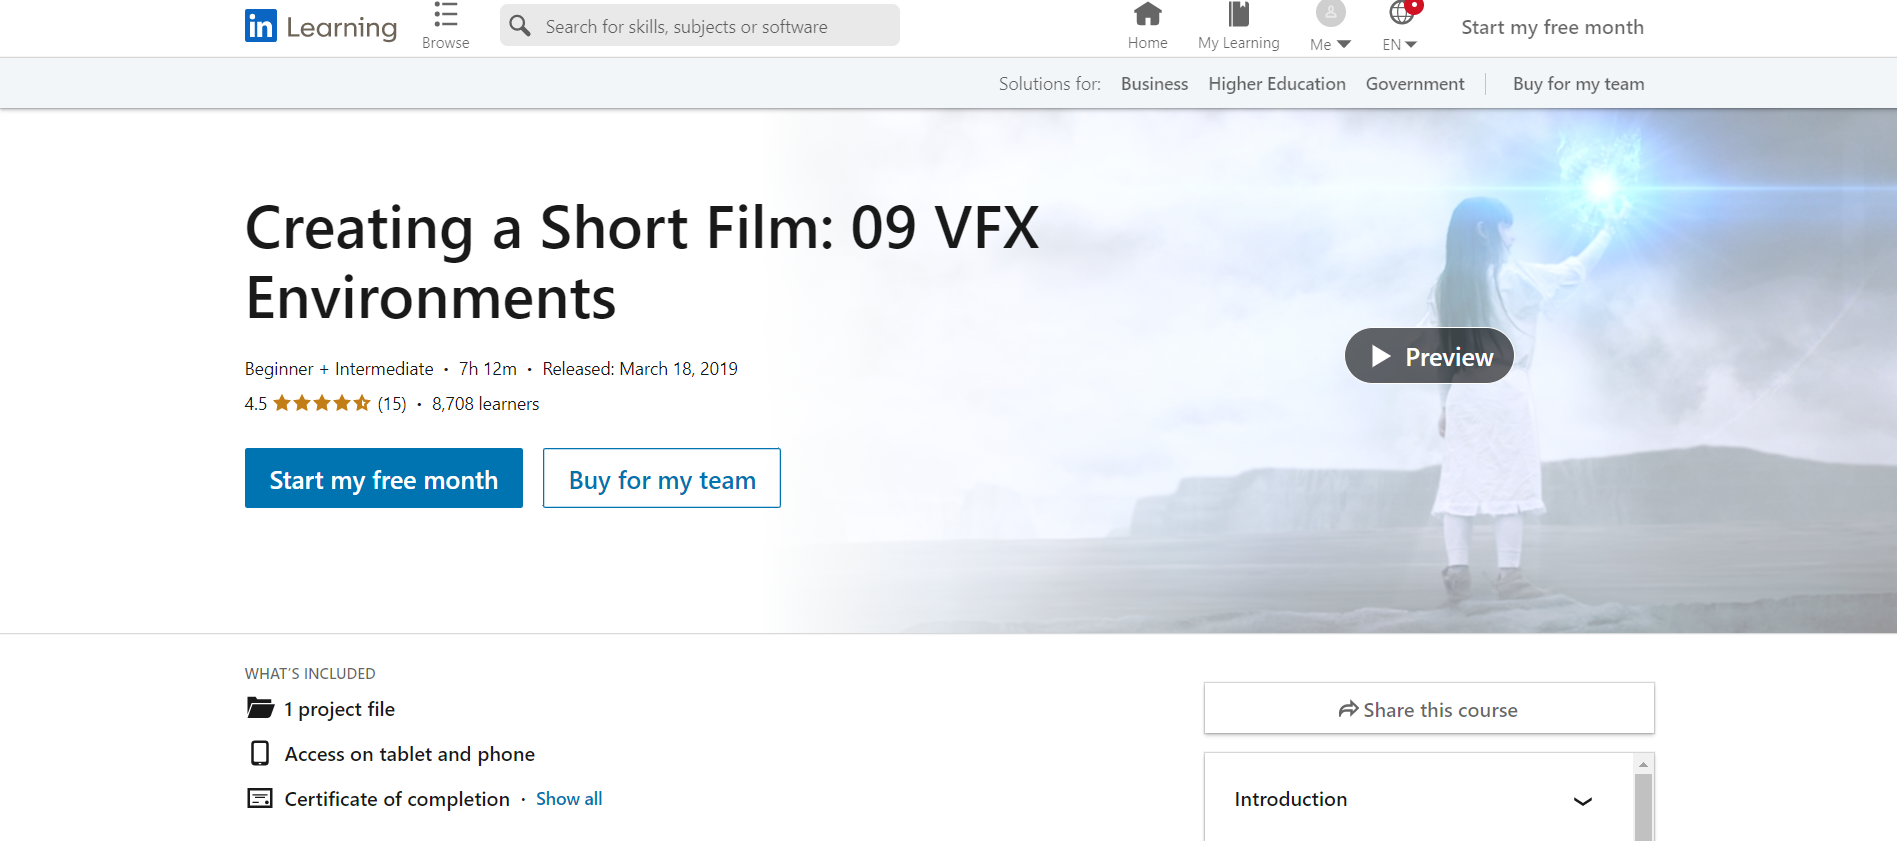 Creating a Short Film 09 VFX Environments